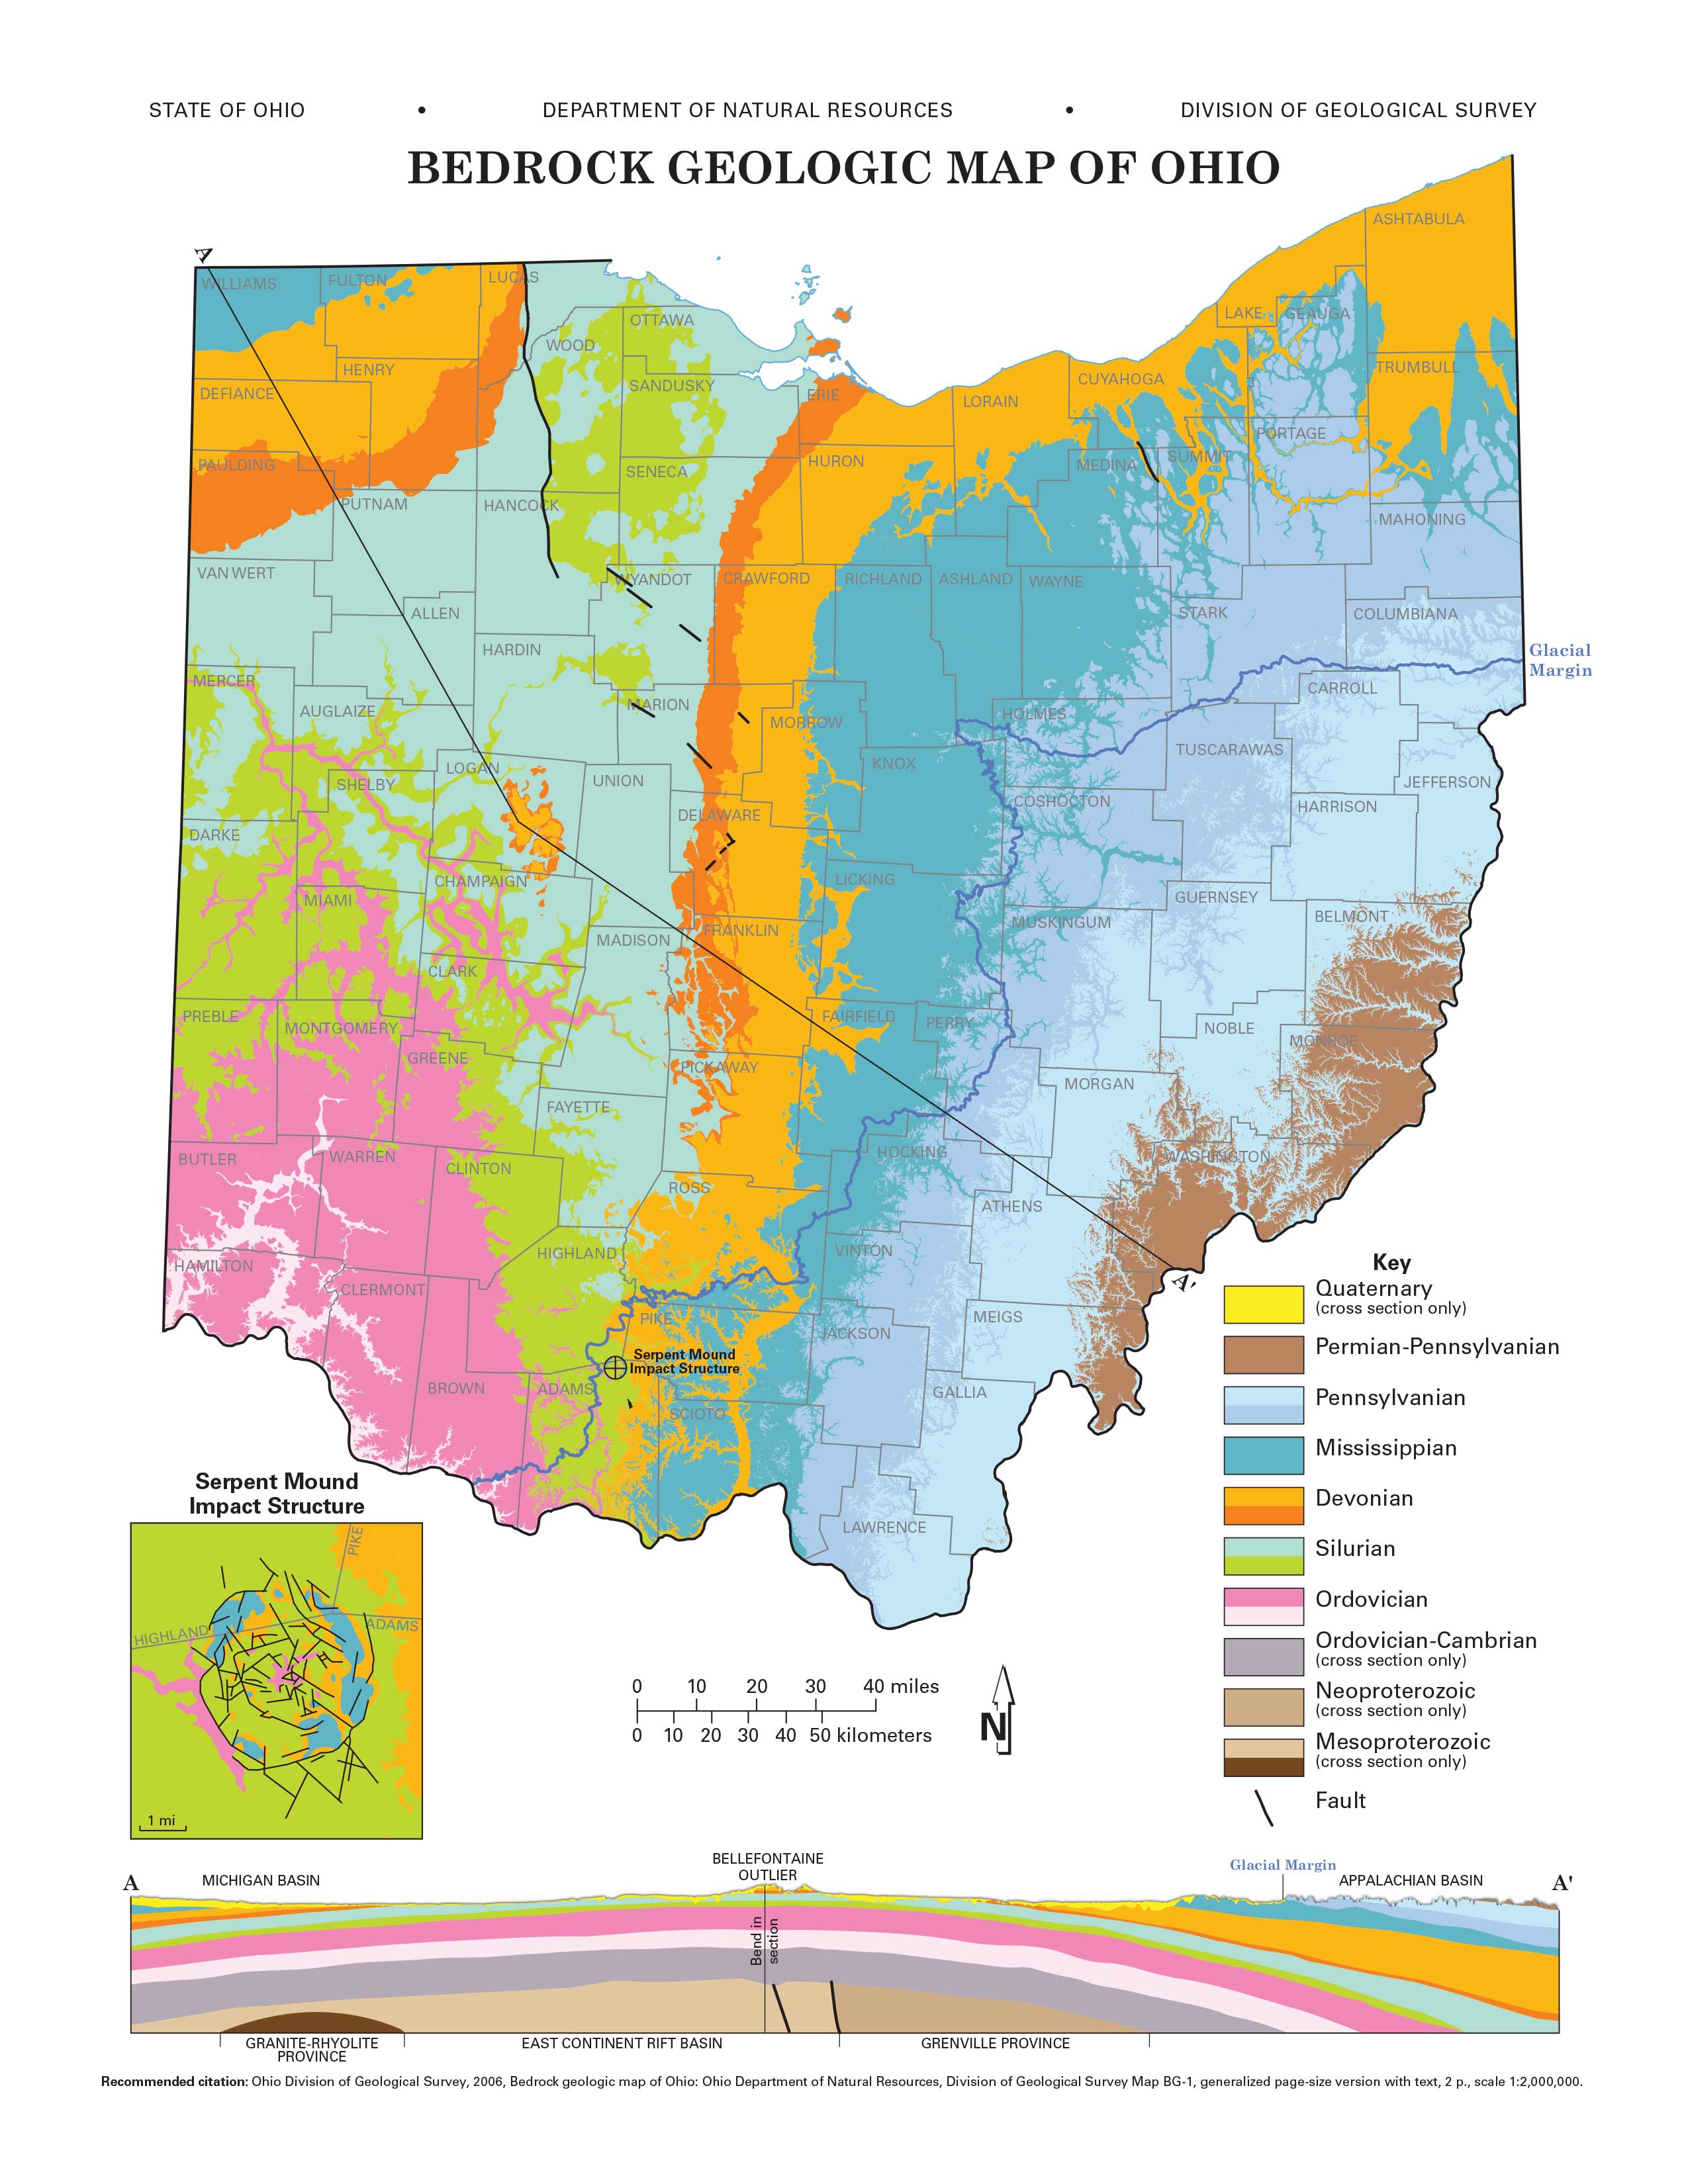 Ohio Division of Geological Survey, 2006, Bedrock geologic map of Ohio